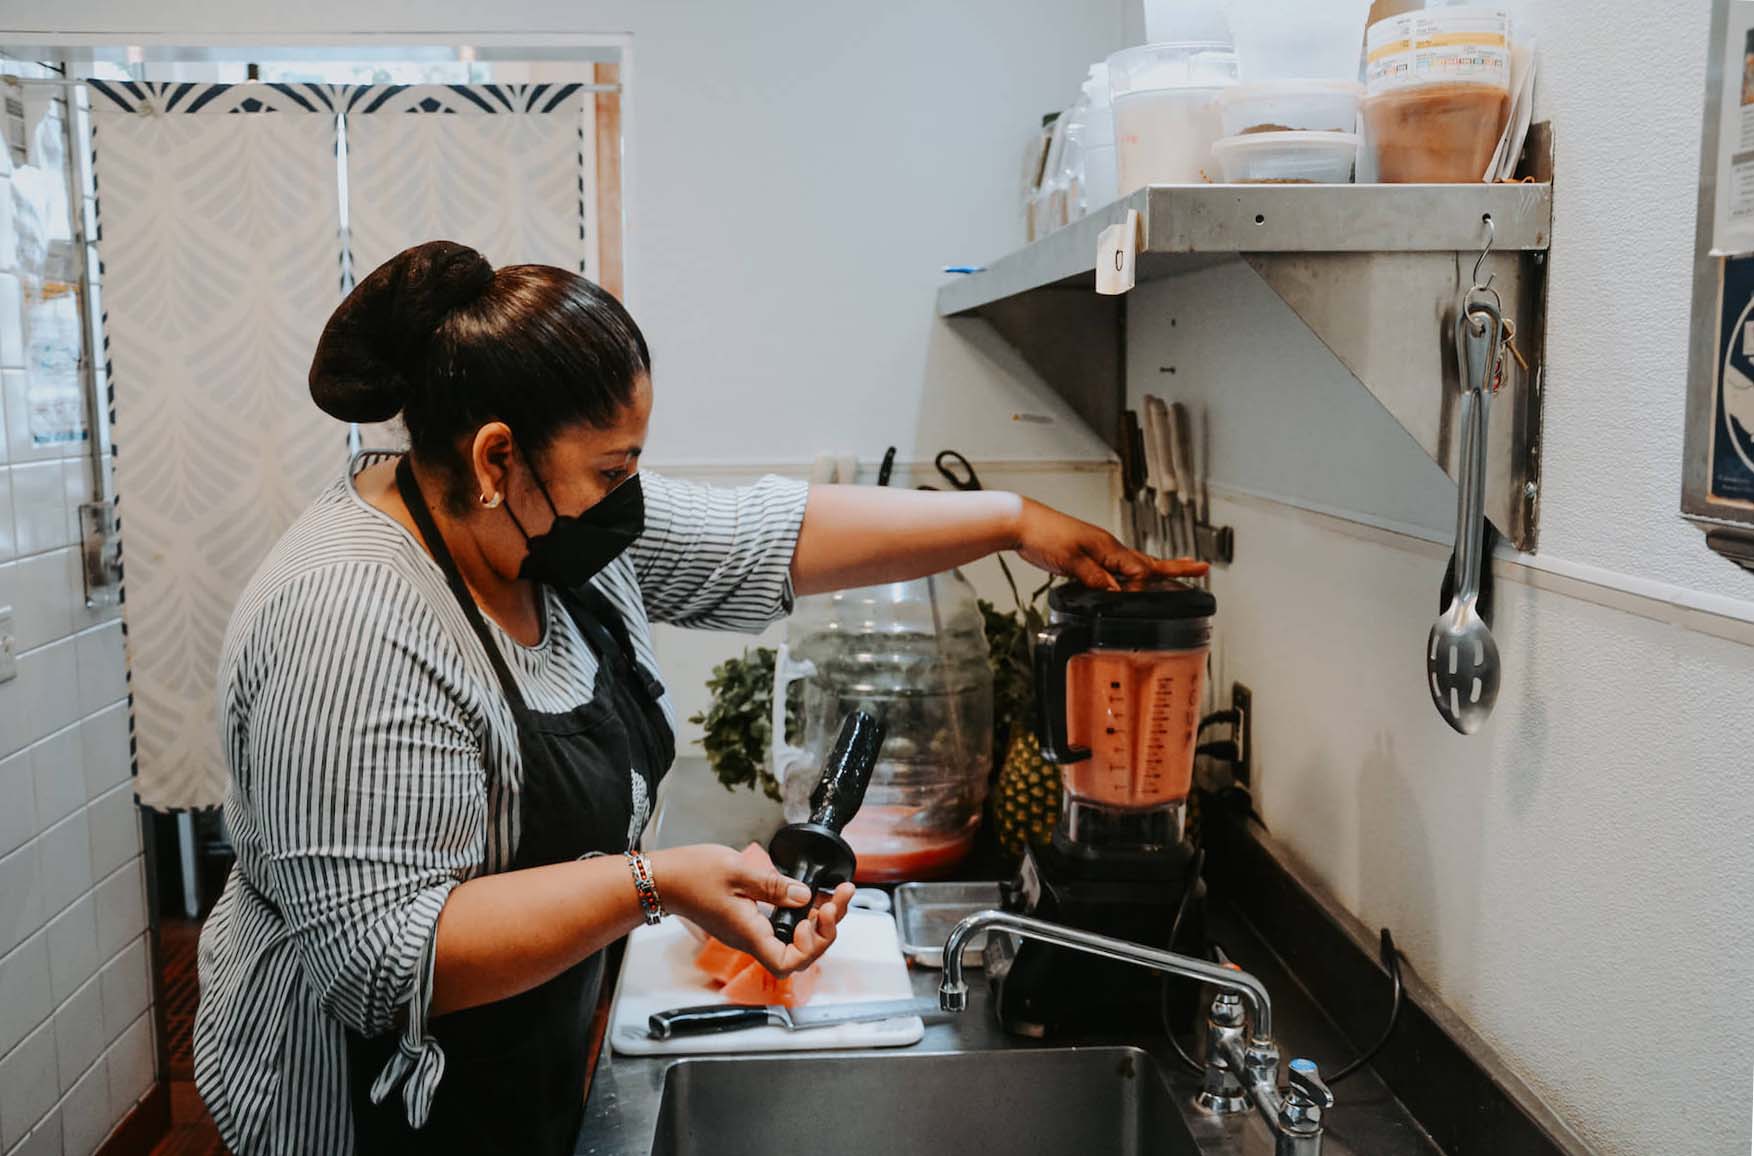 Ofelia Barajas prepares agua de sandia at La Guerrera's Kitchen in Oakland, CA. August 2021